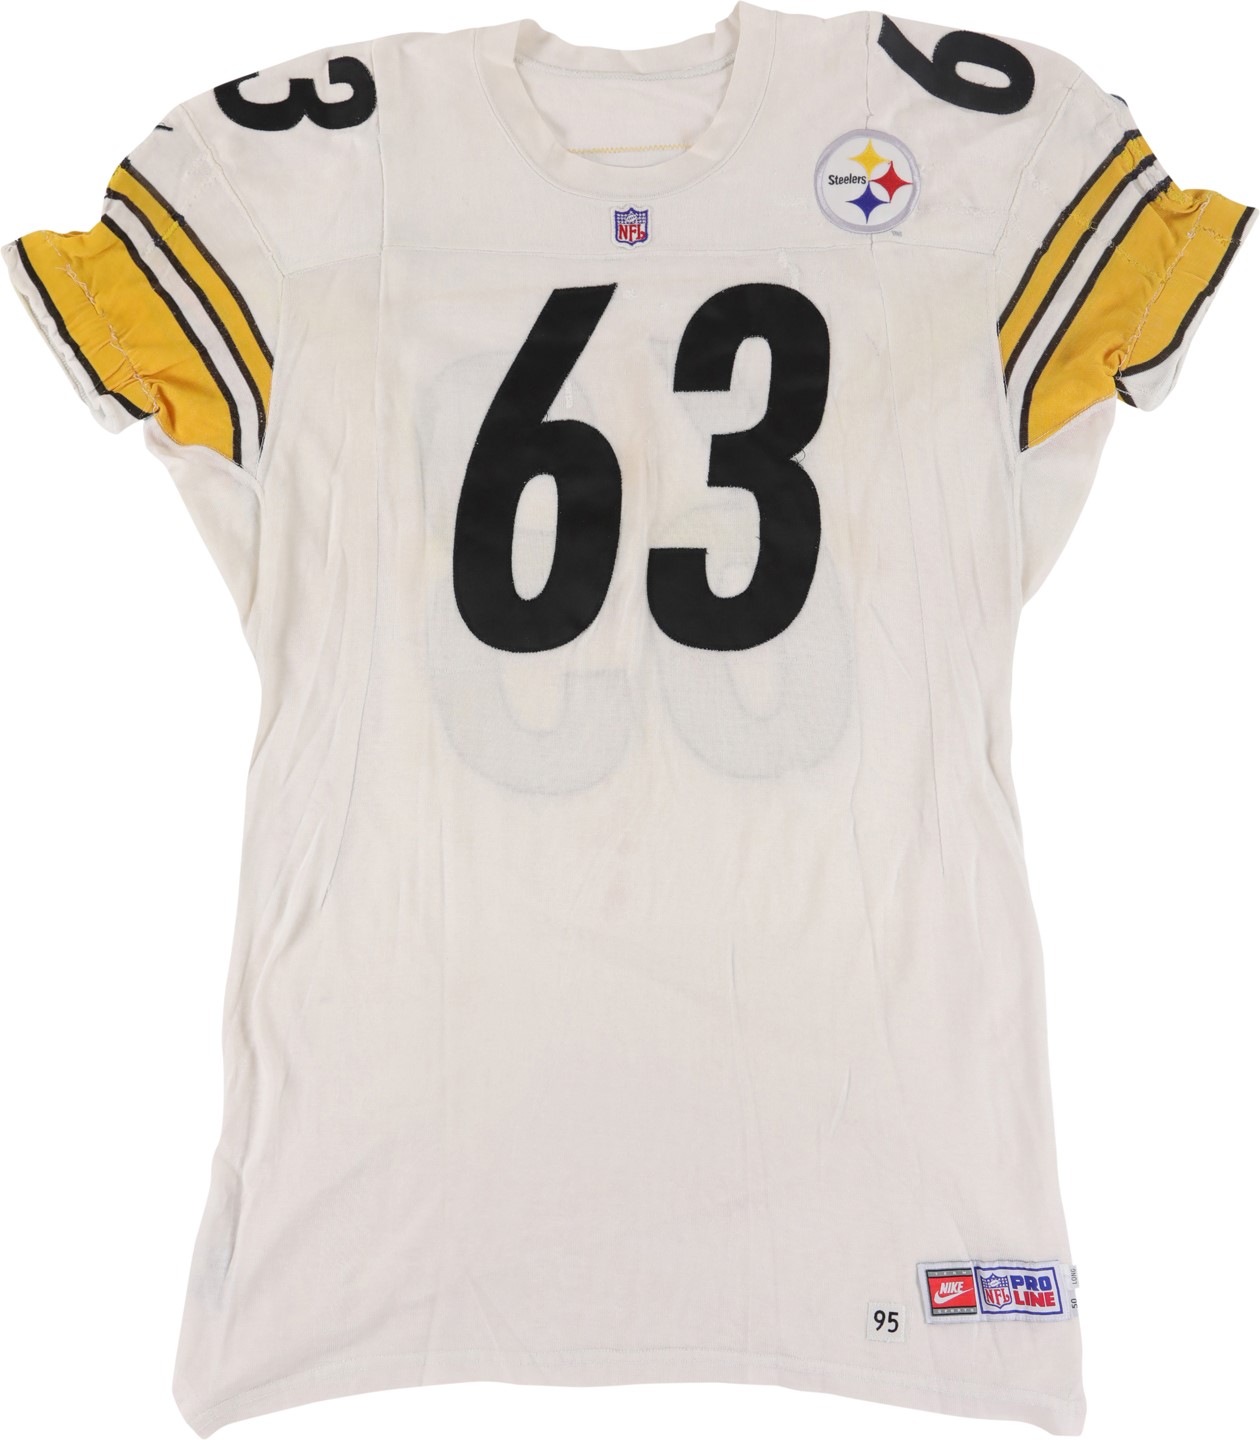 - 1995-96 Dermontti Dawson Pittsburgh Steelers Game Worn Jersey (Steelers Letter)